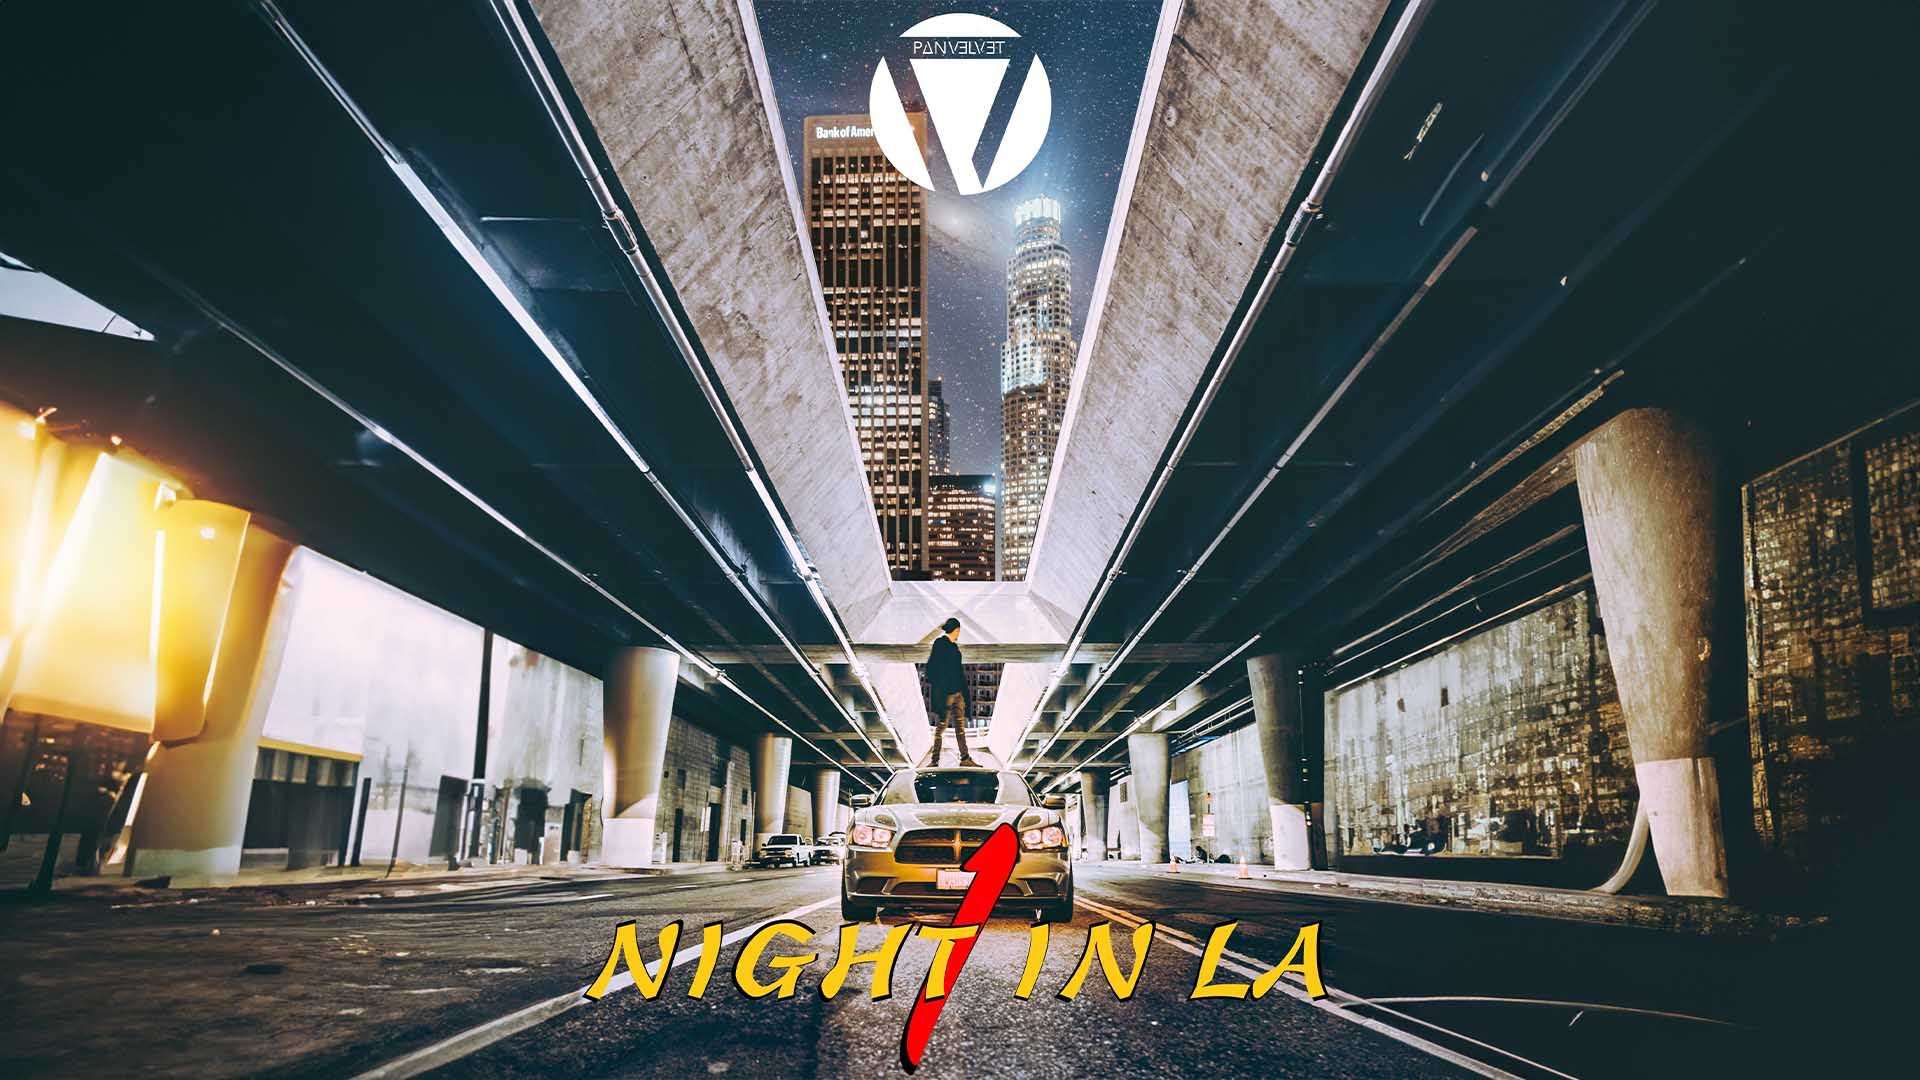 1 NIGHT IN LA 洛杉矶的一夜 短片